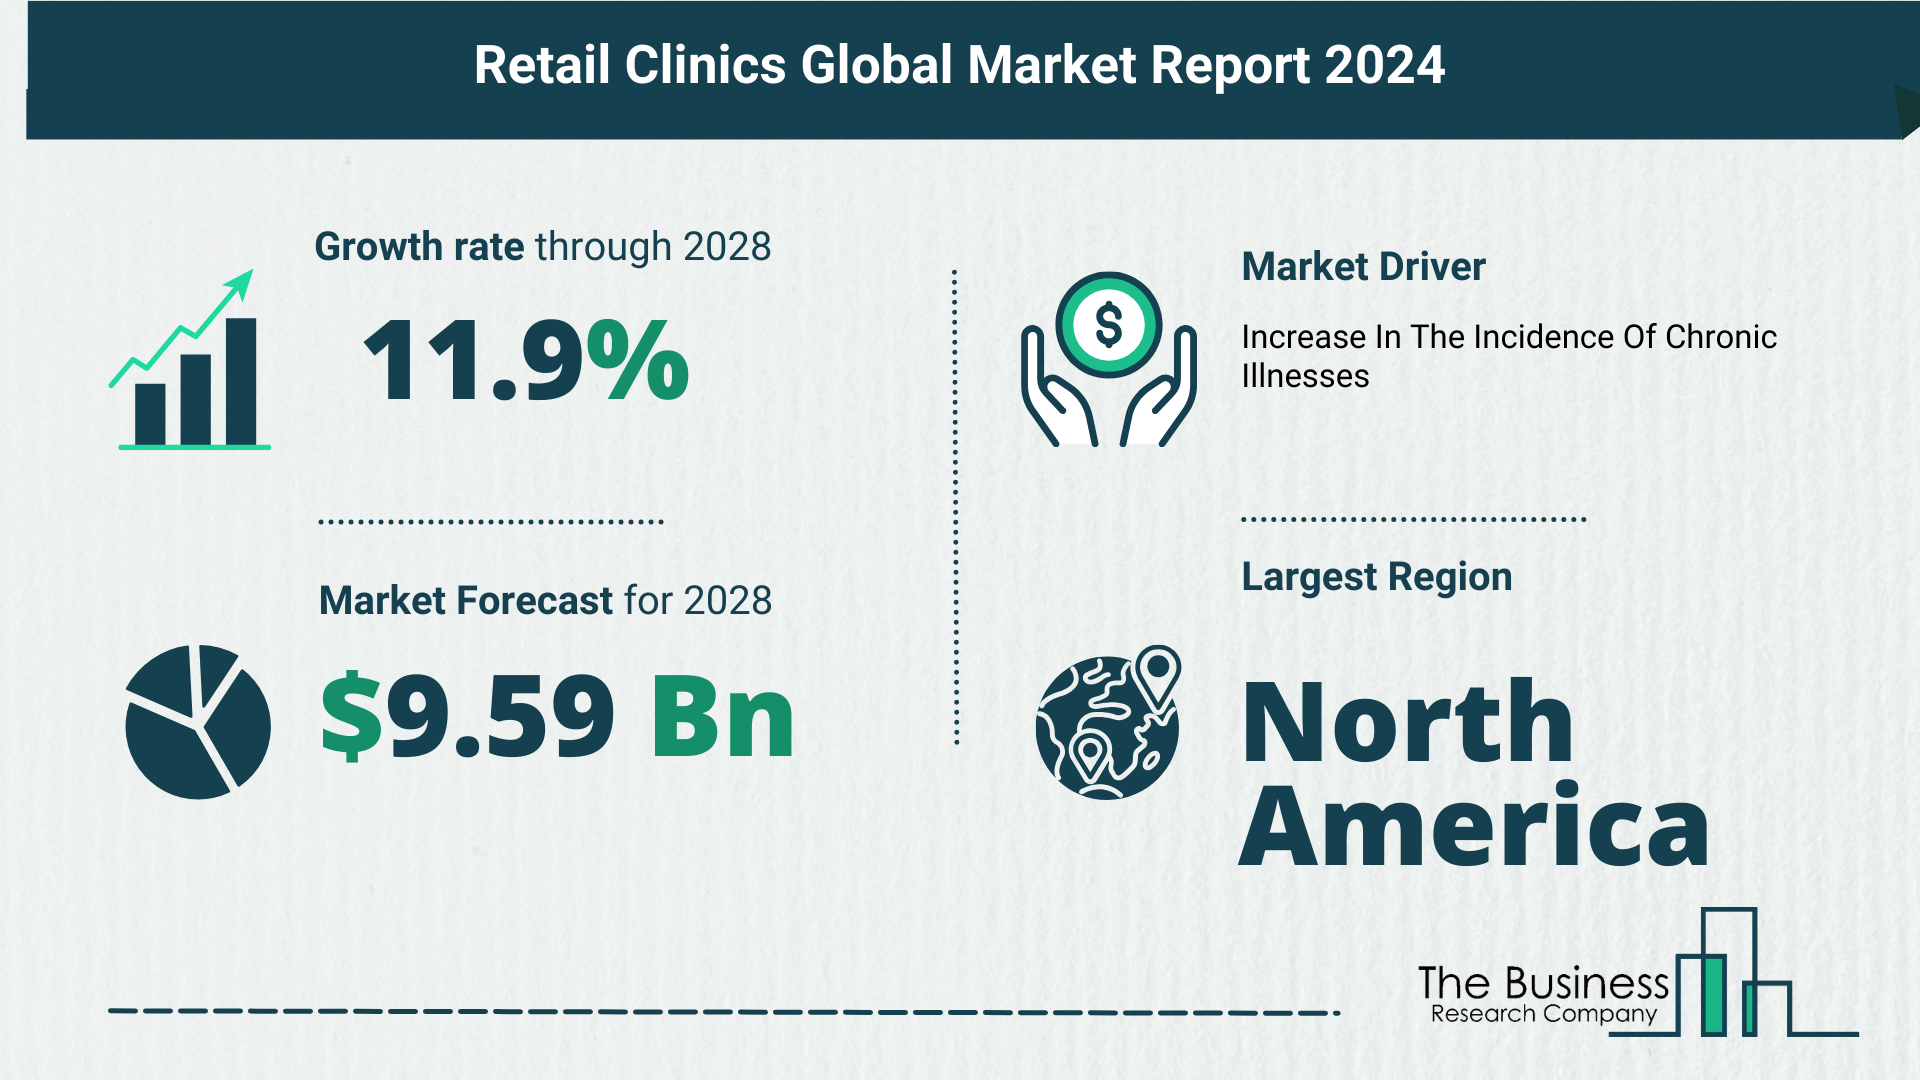 Retail Clinics Market Forecast 2024: Forecast Market Size, Drivers And Key Segments